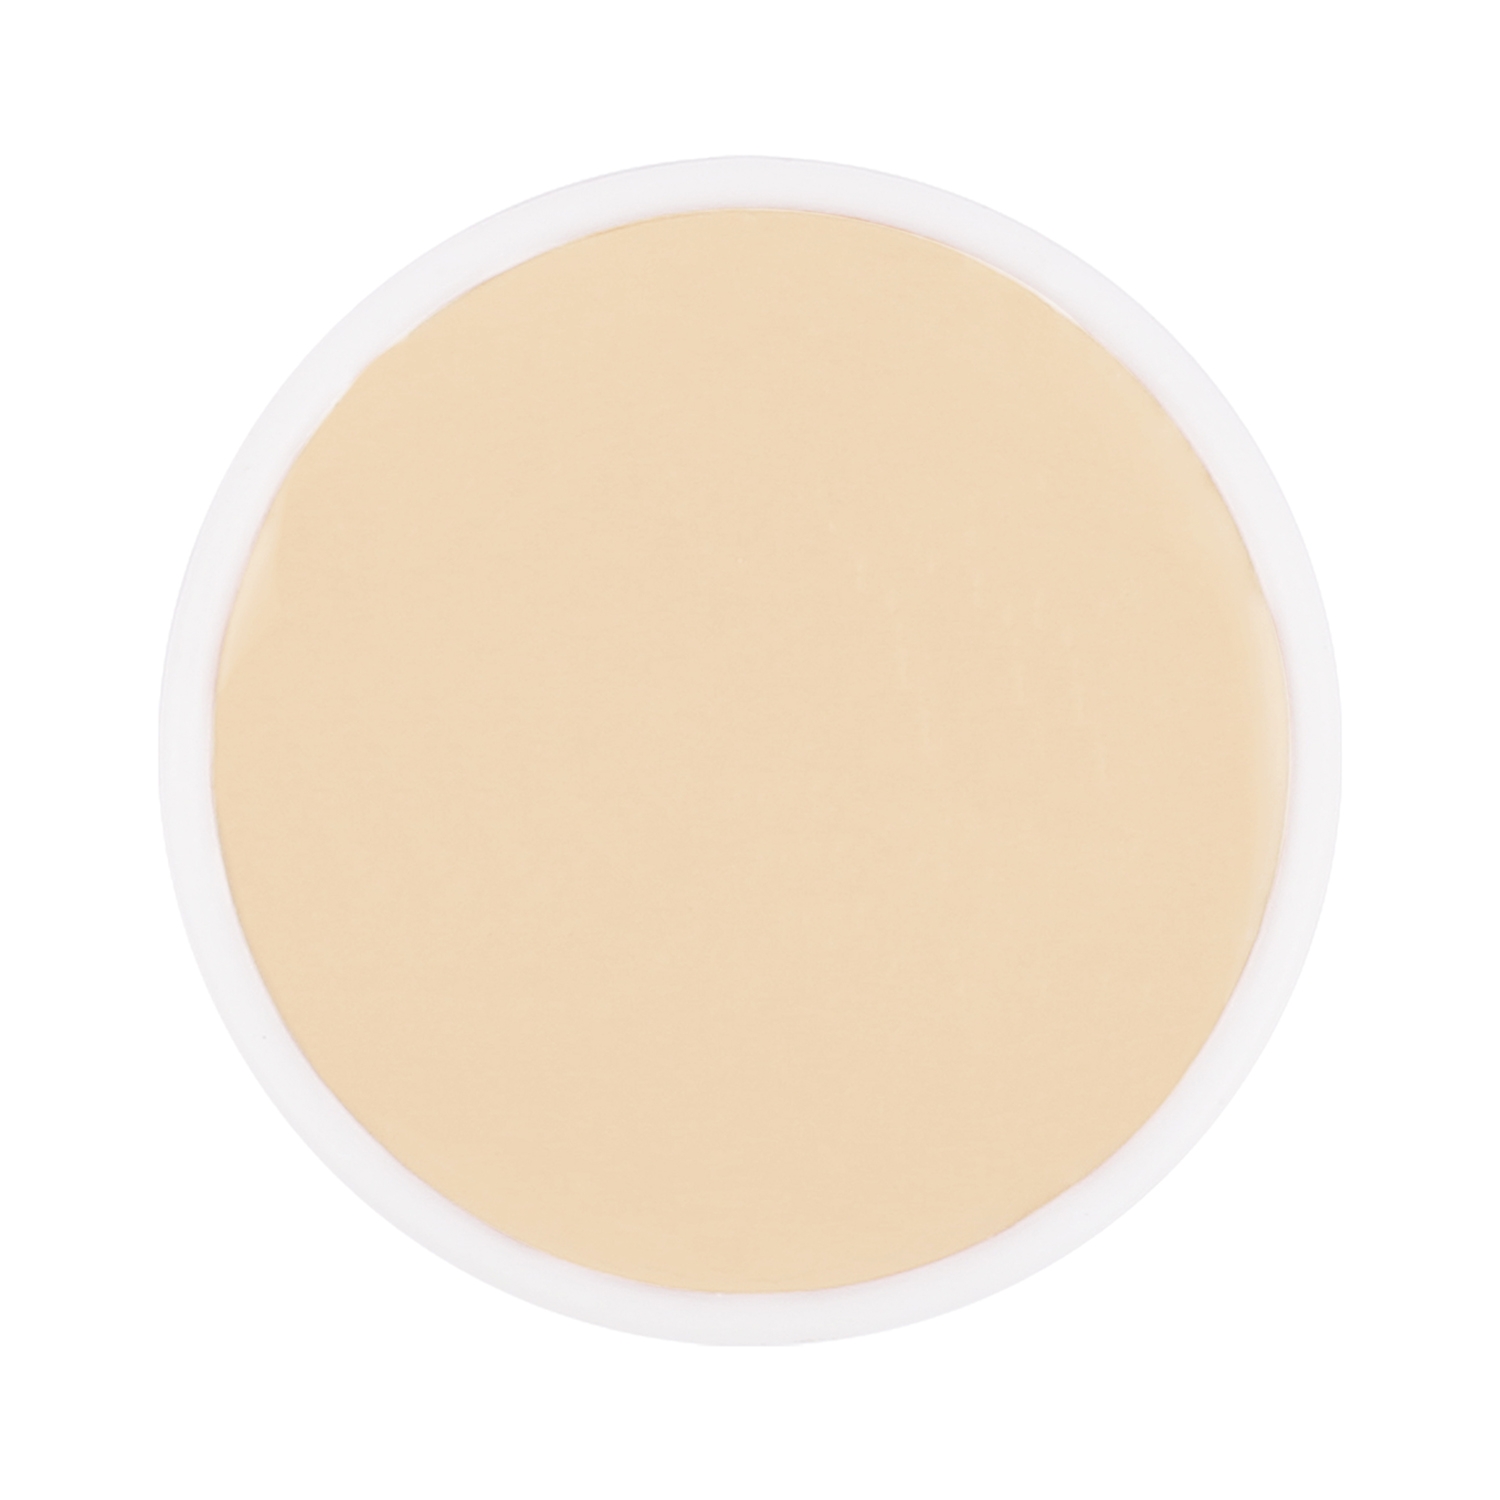 Stars Cosmetics | Stars Cosmetics Natural Finish Cream Face Make Up Foundation Palette - Ivory (4g)